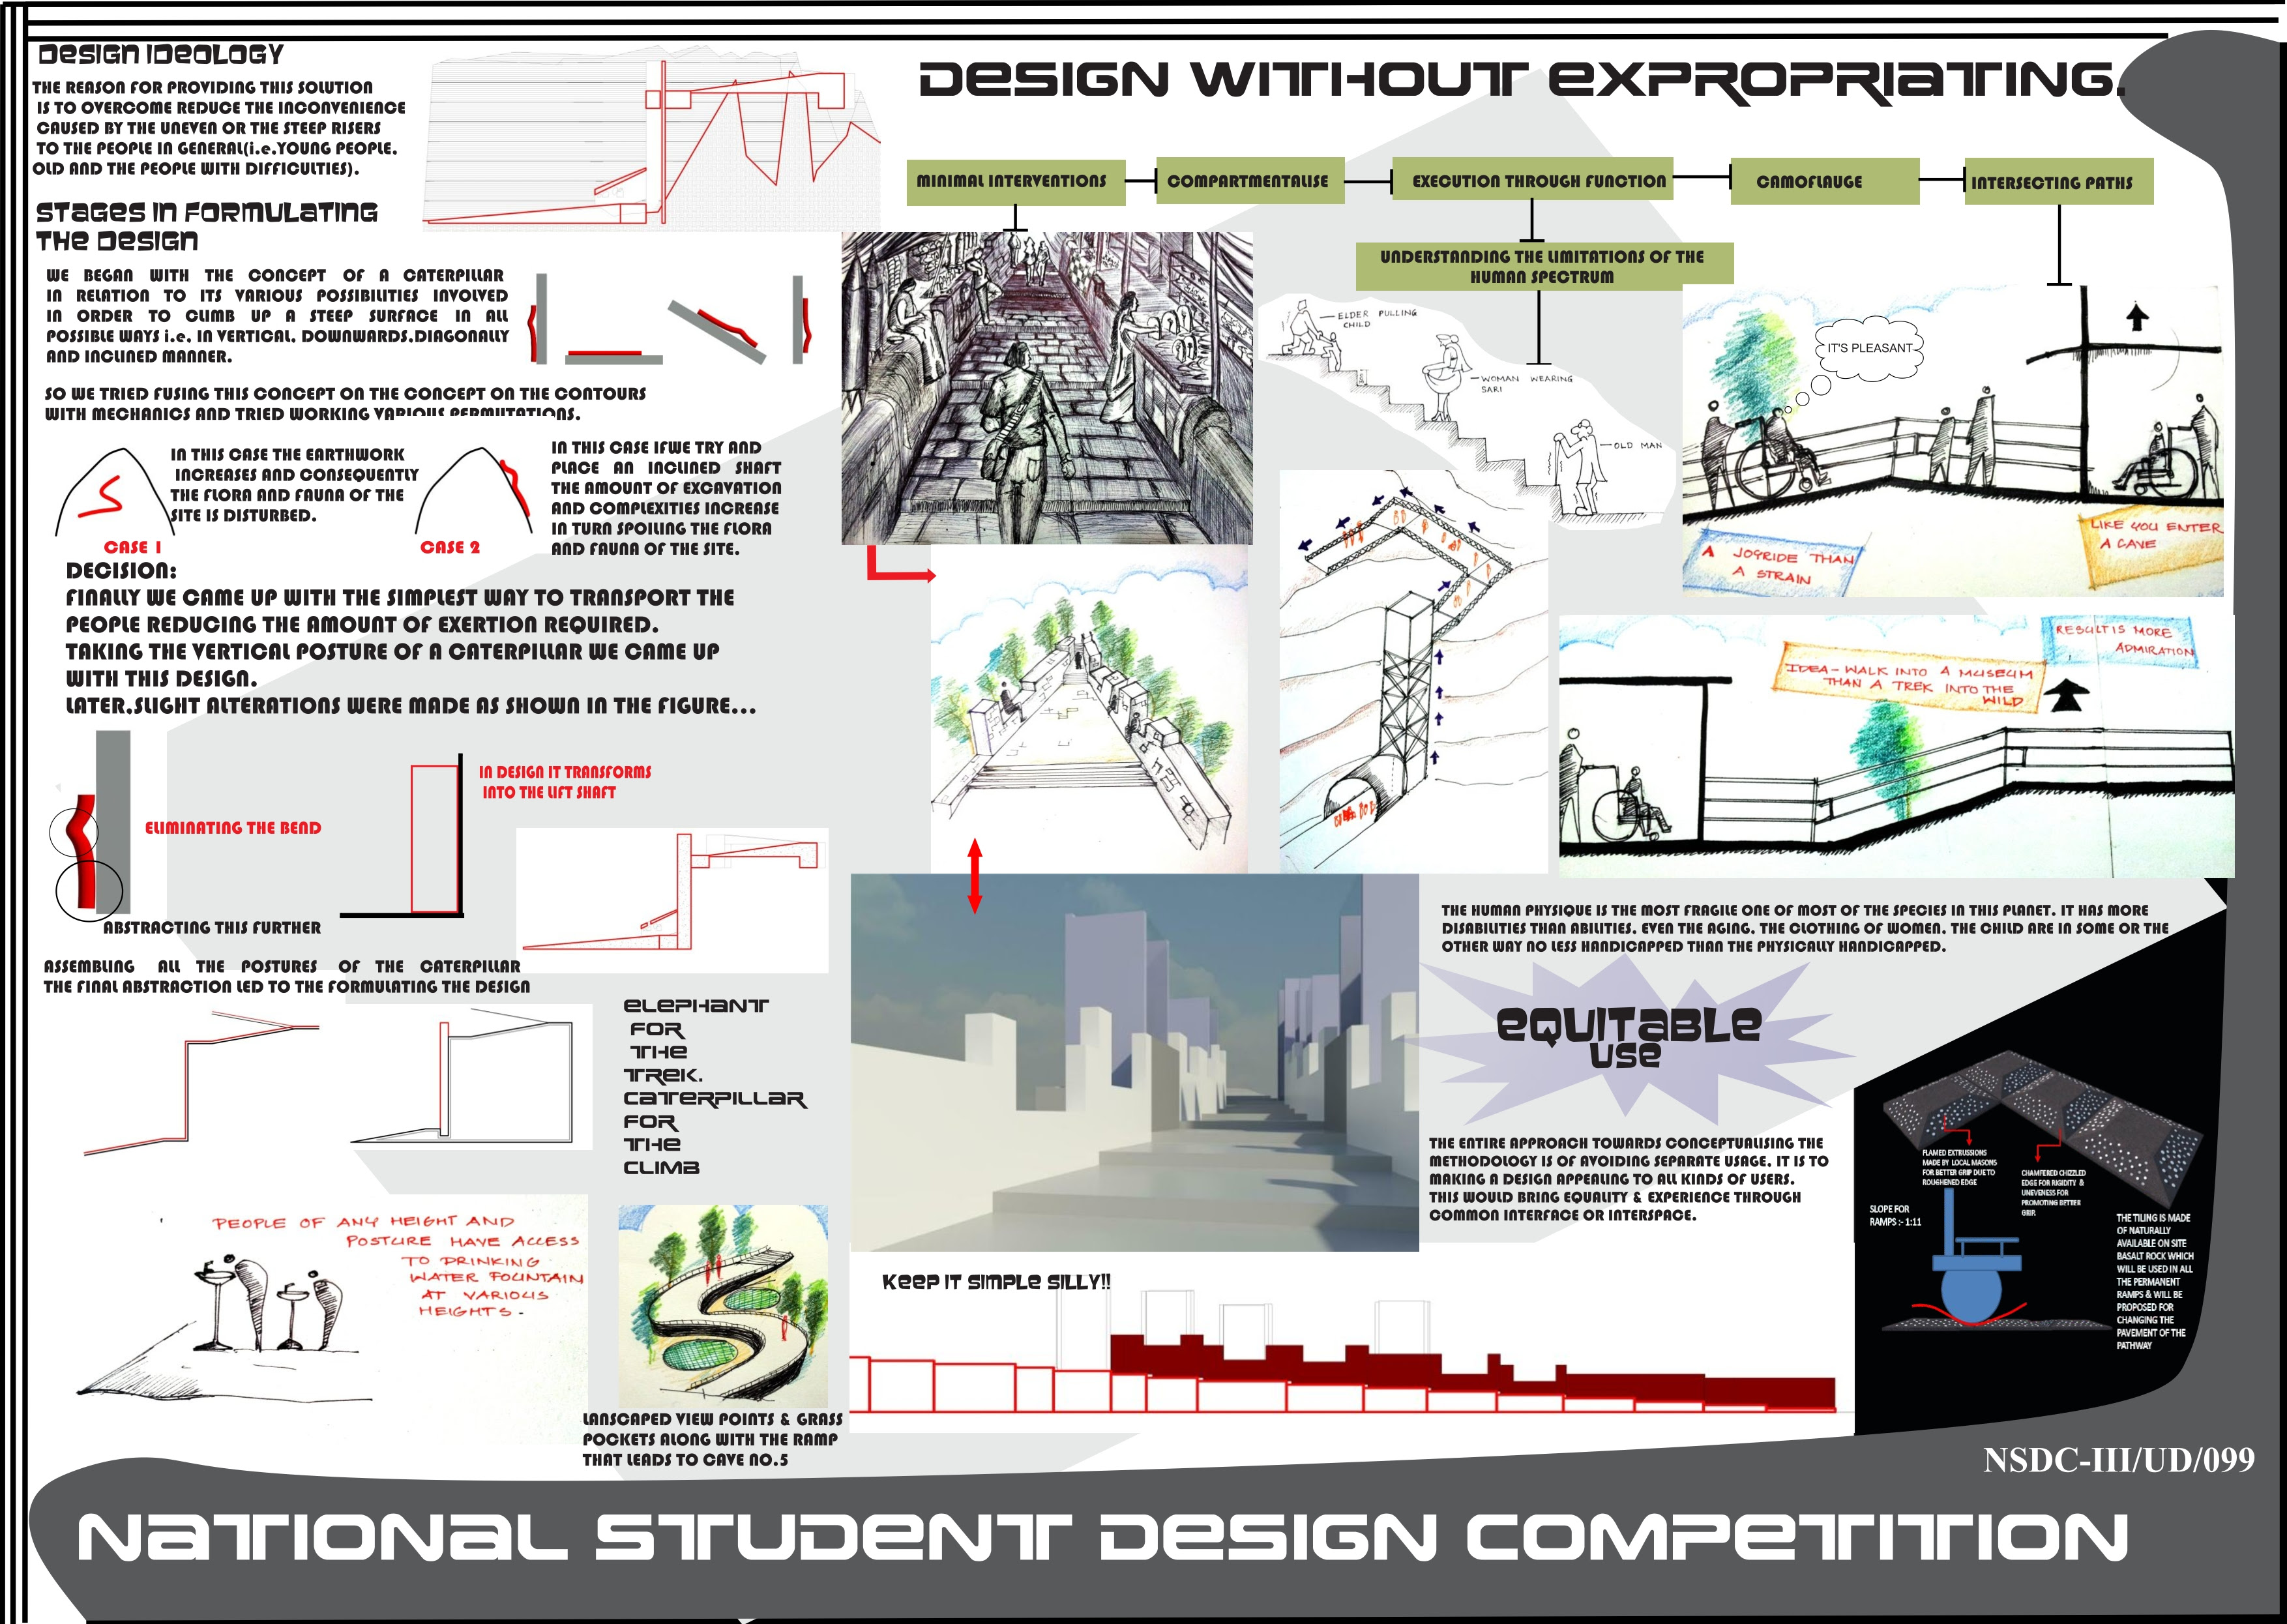 architecture thesis sample pdf